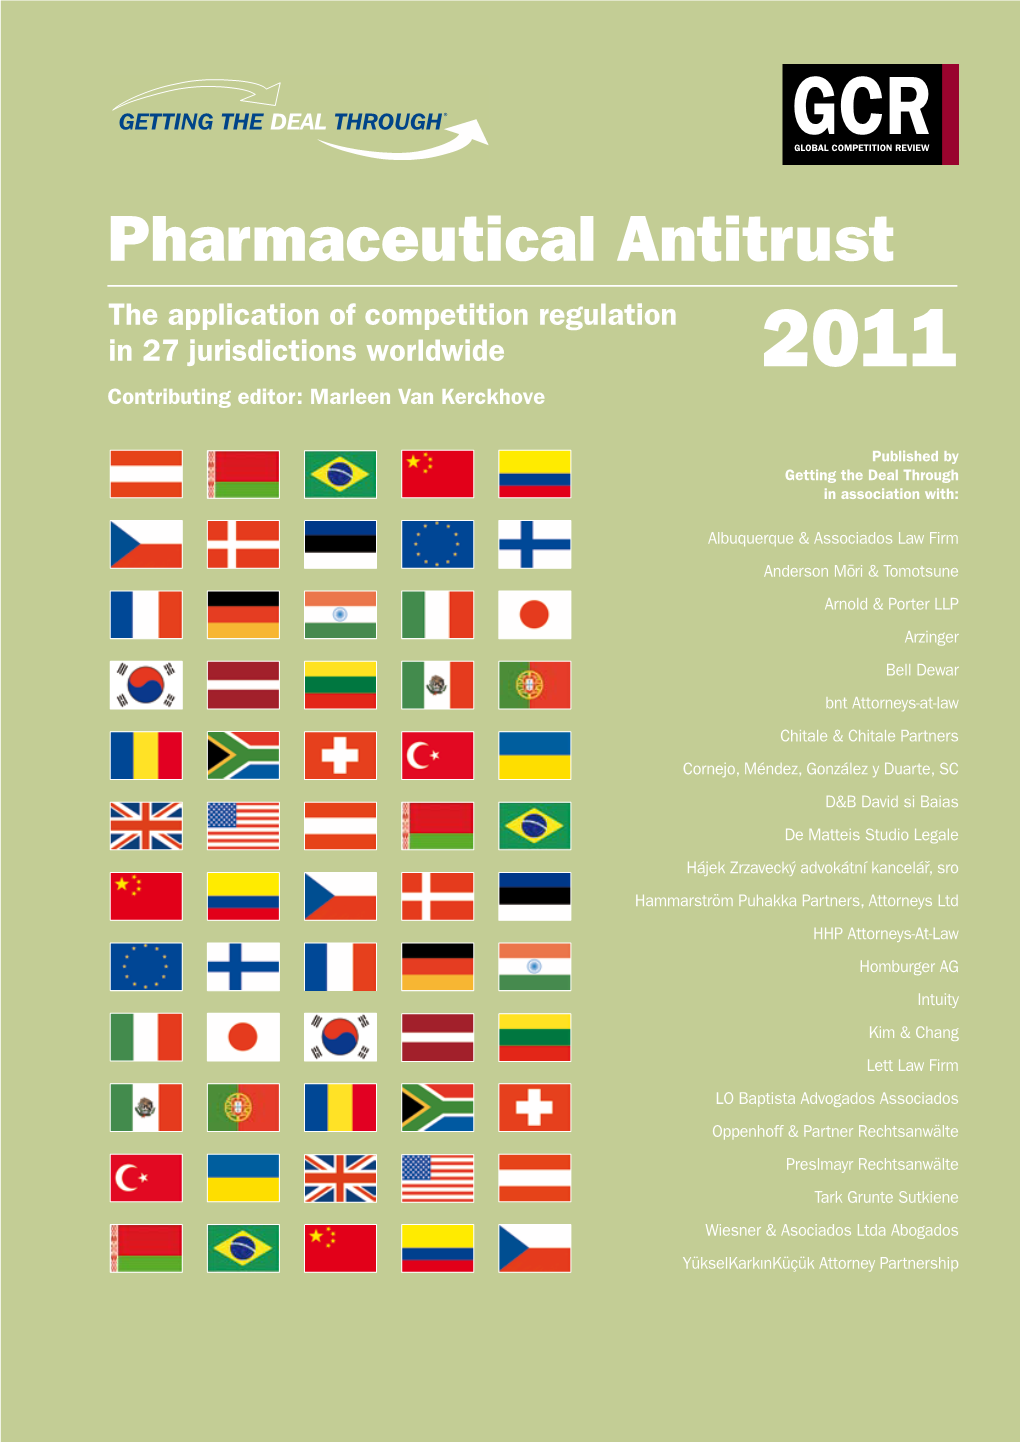 Pharmaceutical Antitrust the Application of Competition Regulation in 27 Jurisdictions Worldwide 2011 Contributing Editor: Marleen Van Kerckhove